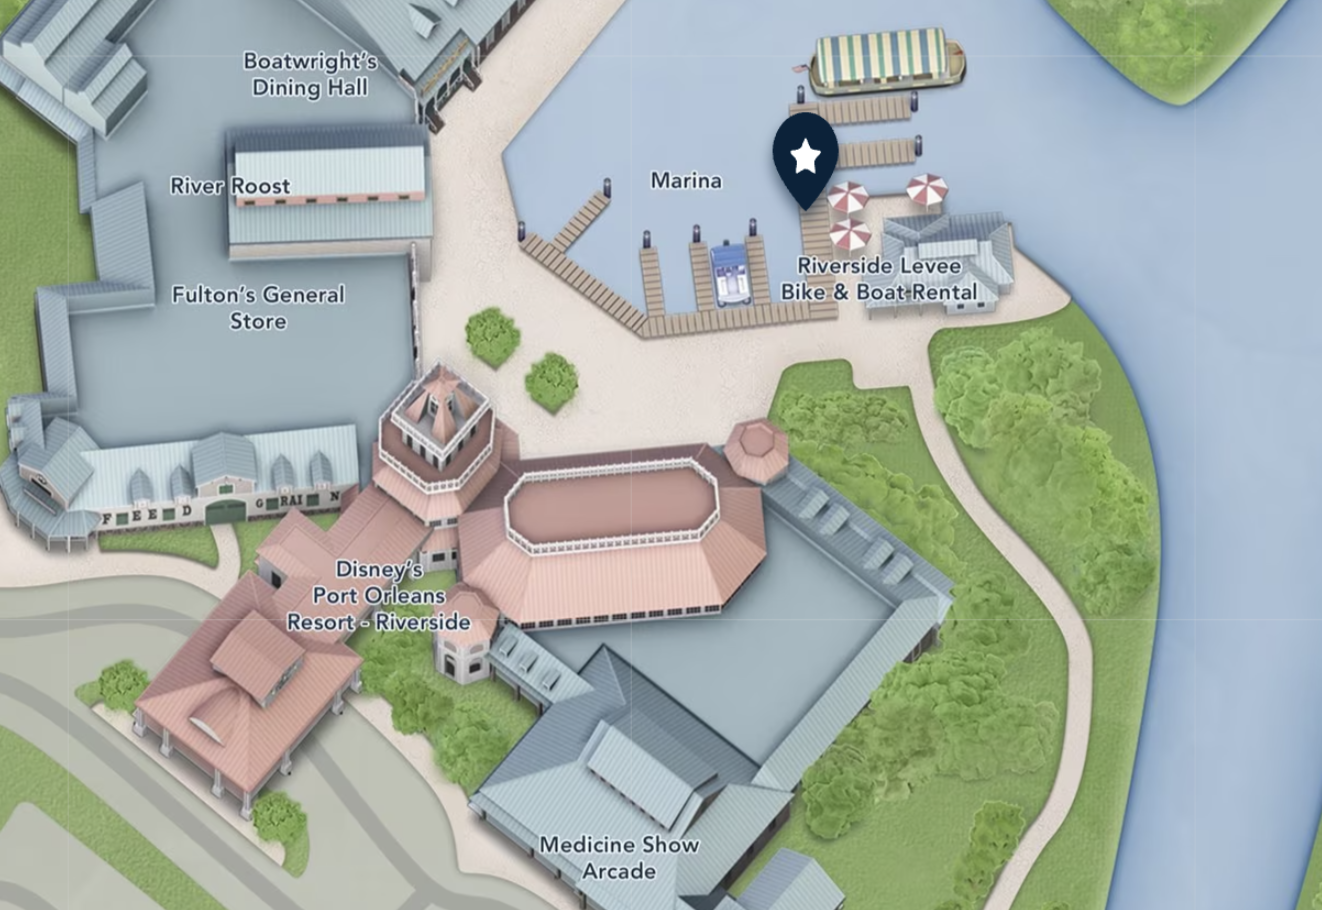 Disney’s Port Orleans Resort - Riverside Boat Launch Map